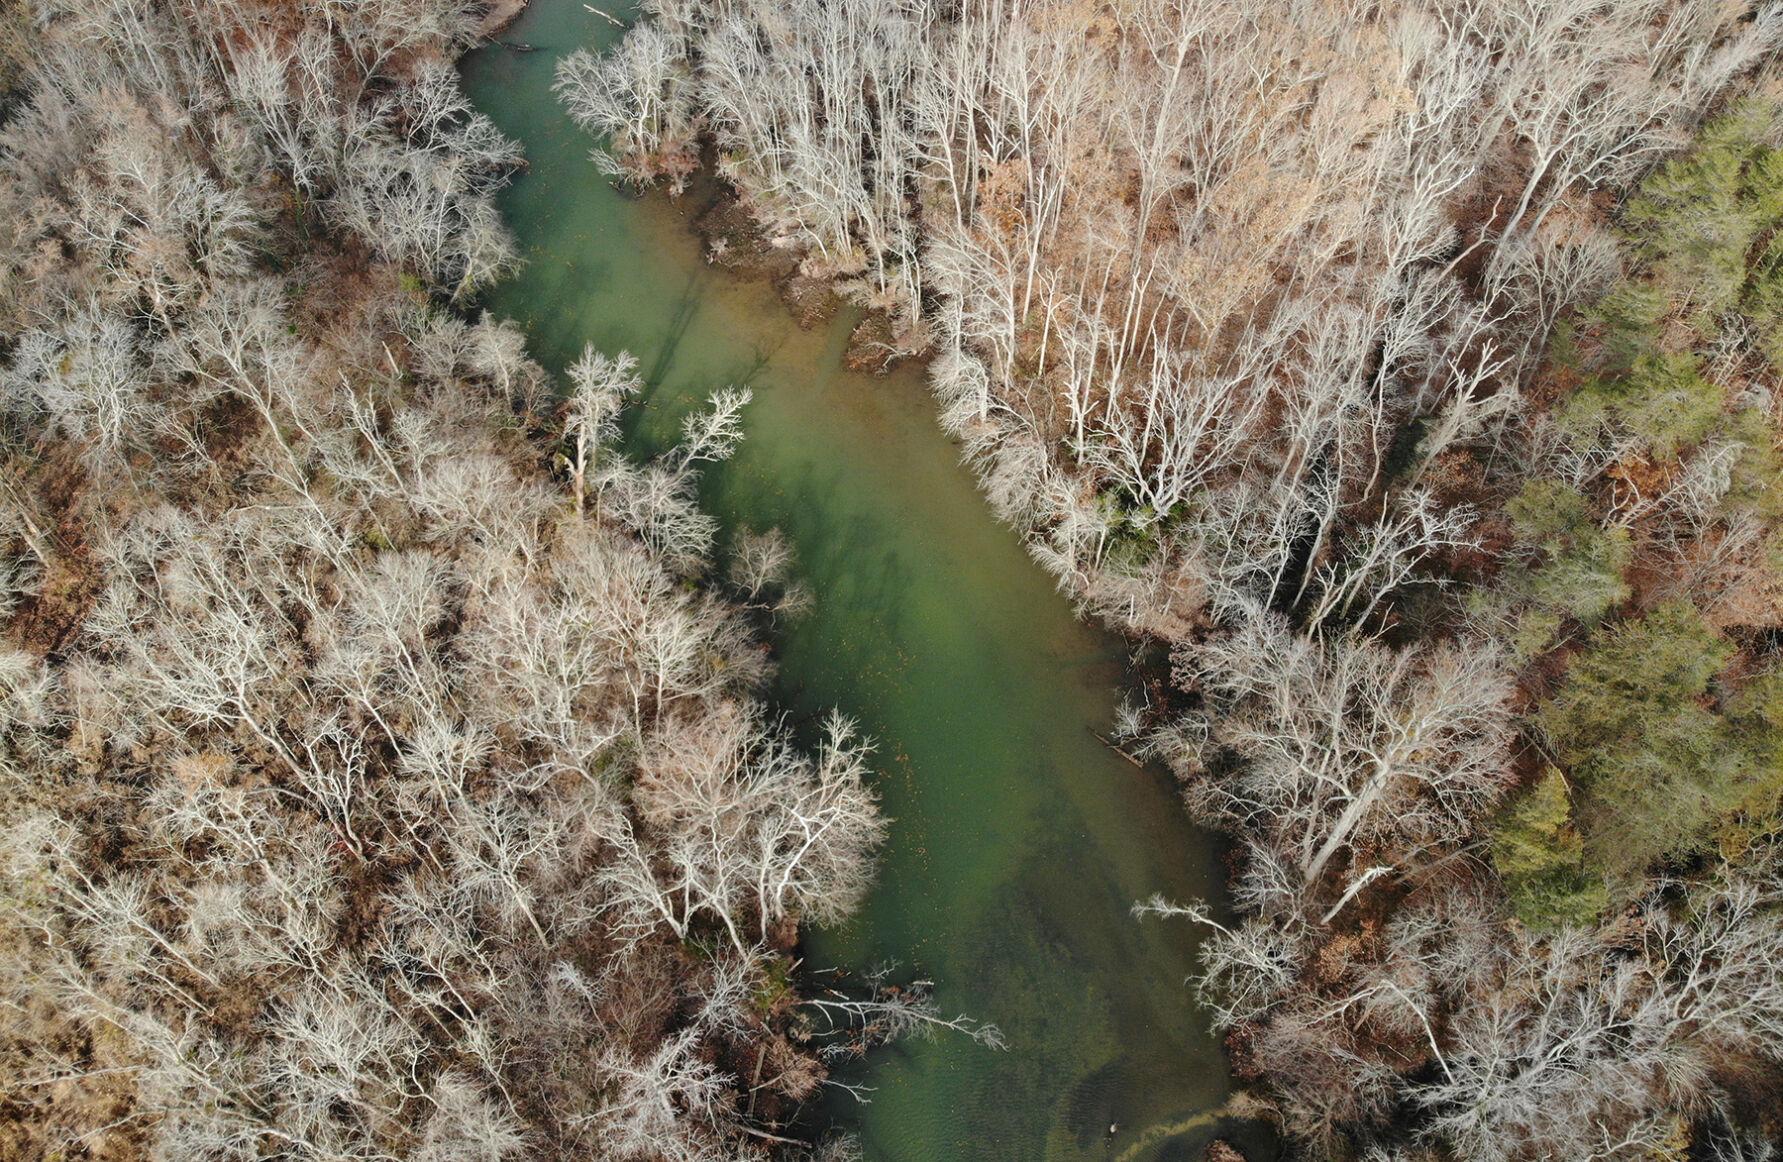 Sand Mine Spill Turns Eastern Shore Creek Bright Green